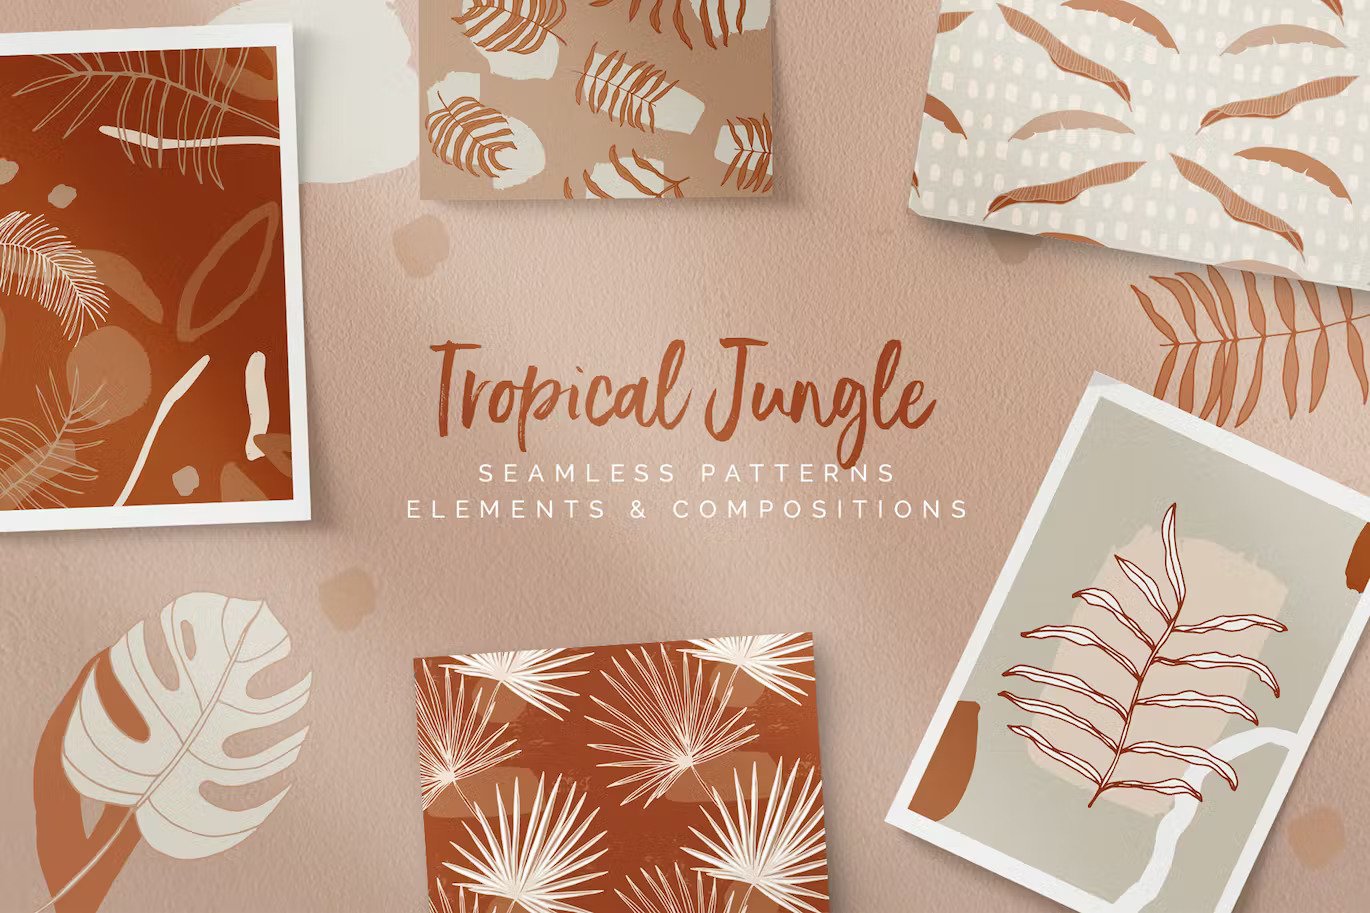 A tropical jungle seamless patterns